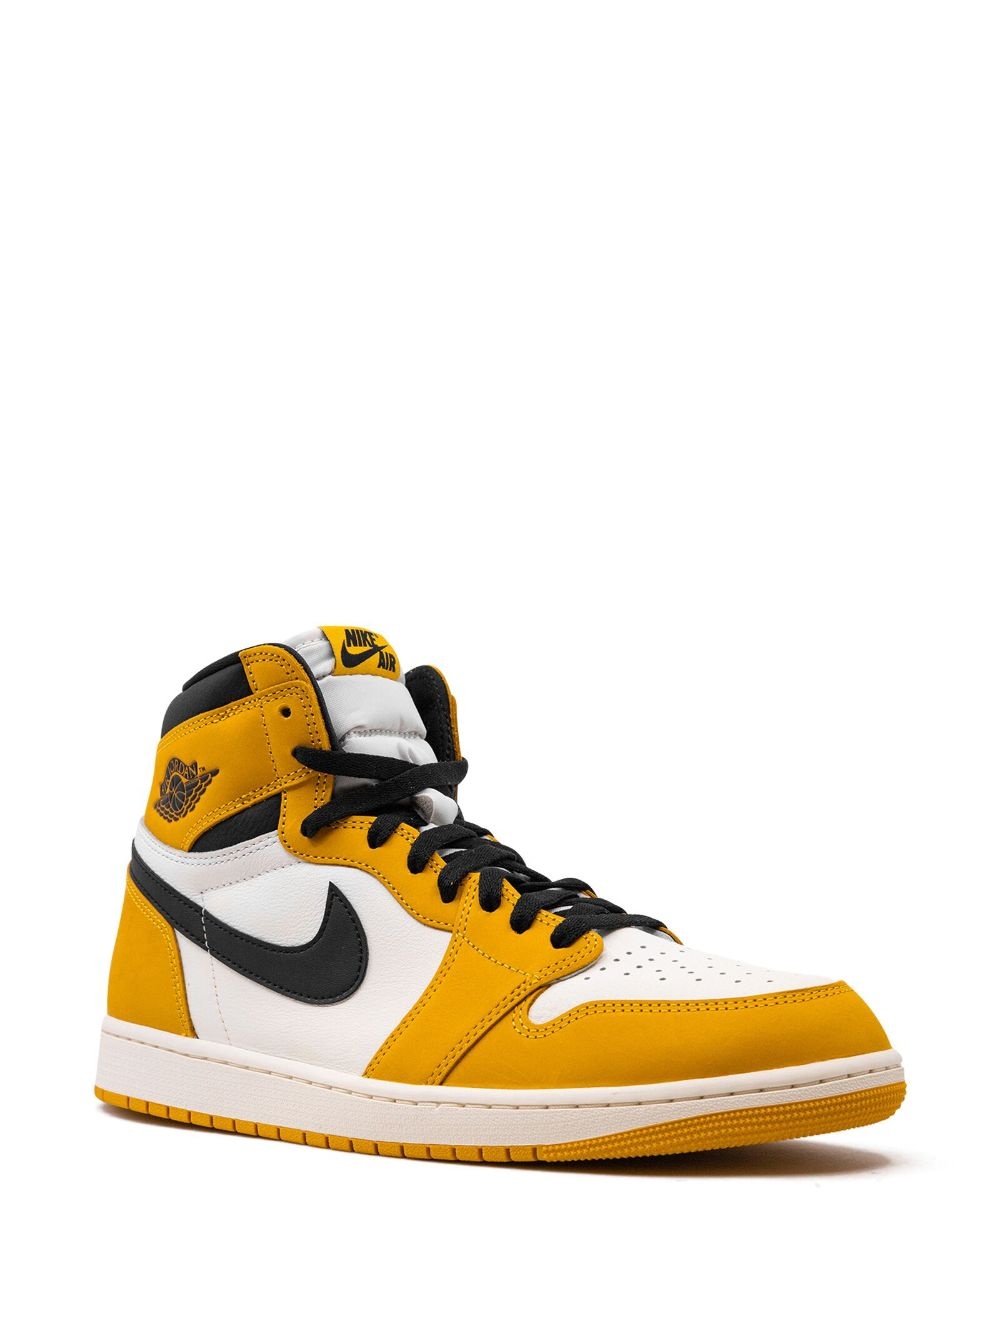 Air Jordan 1 Retro High OG "Yellow Ochre" sneakers - 2